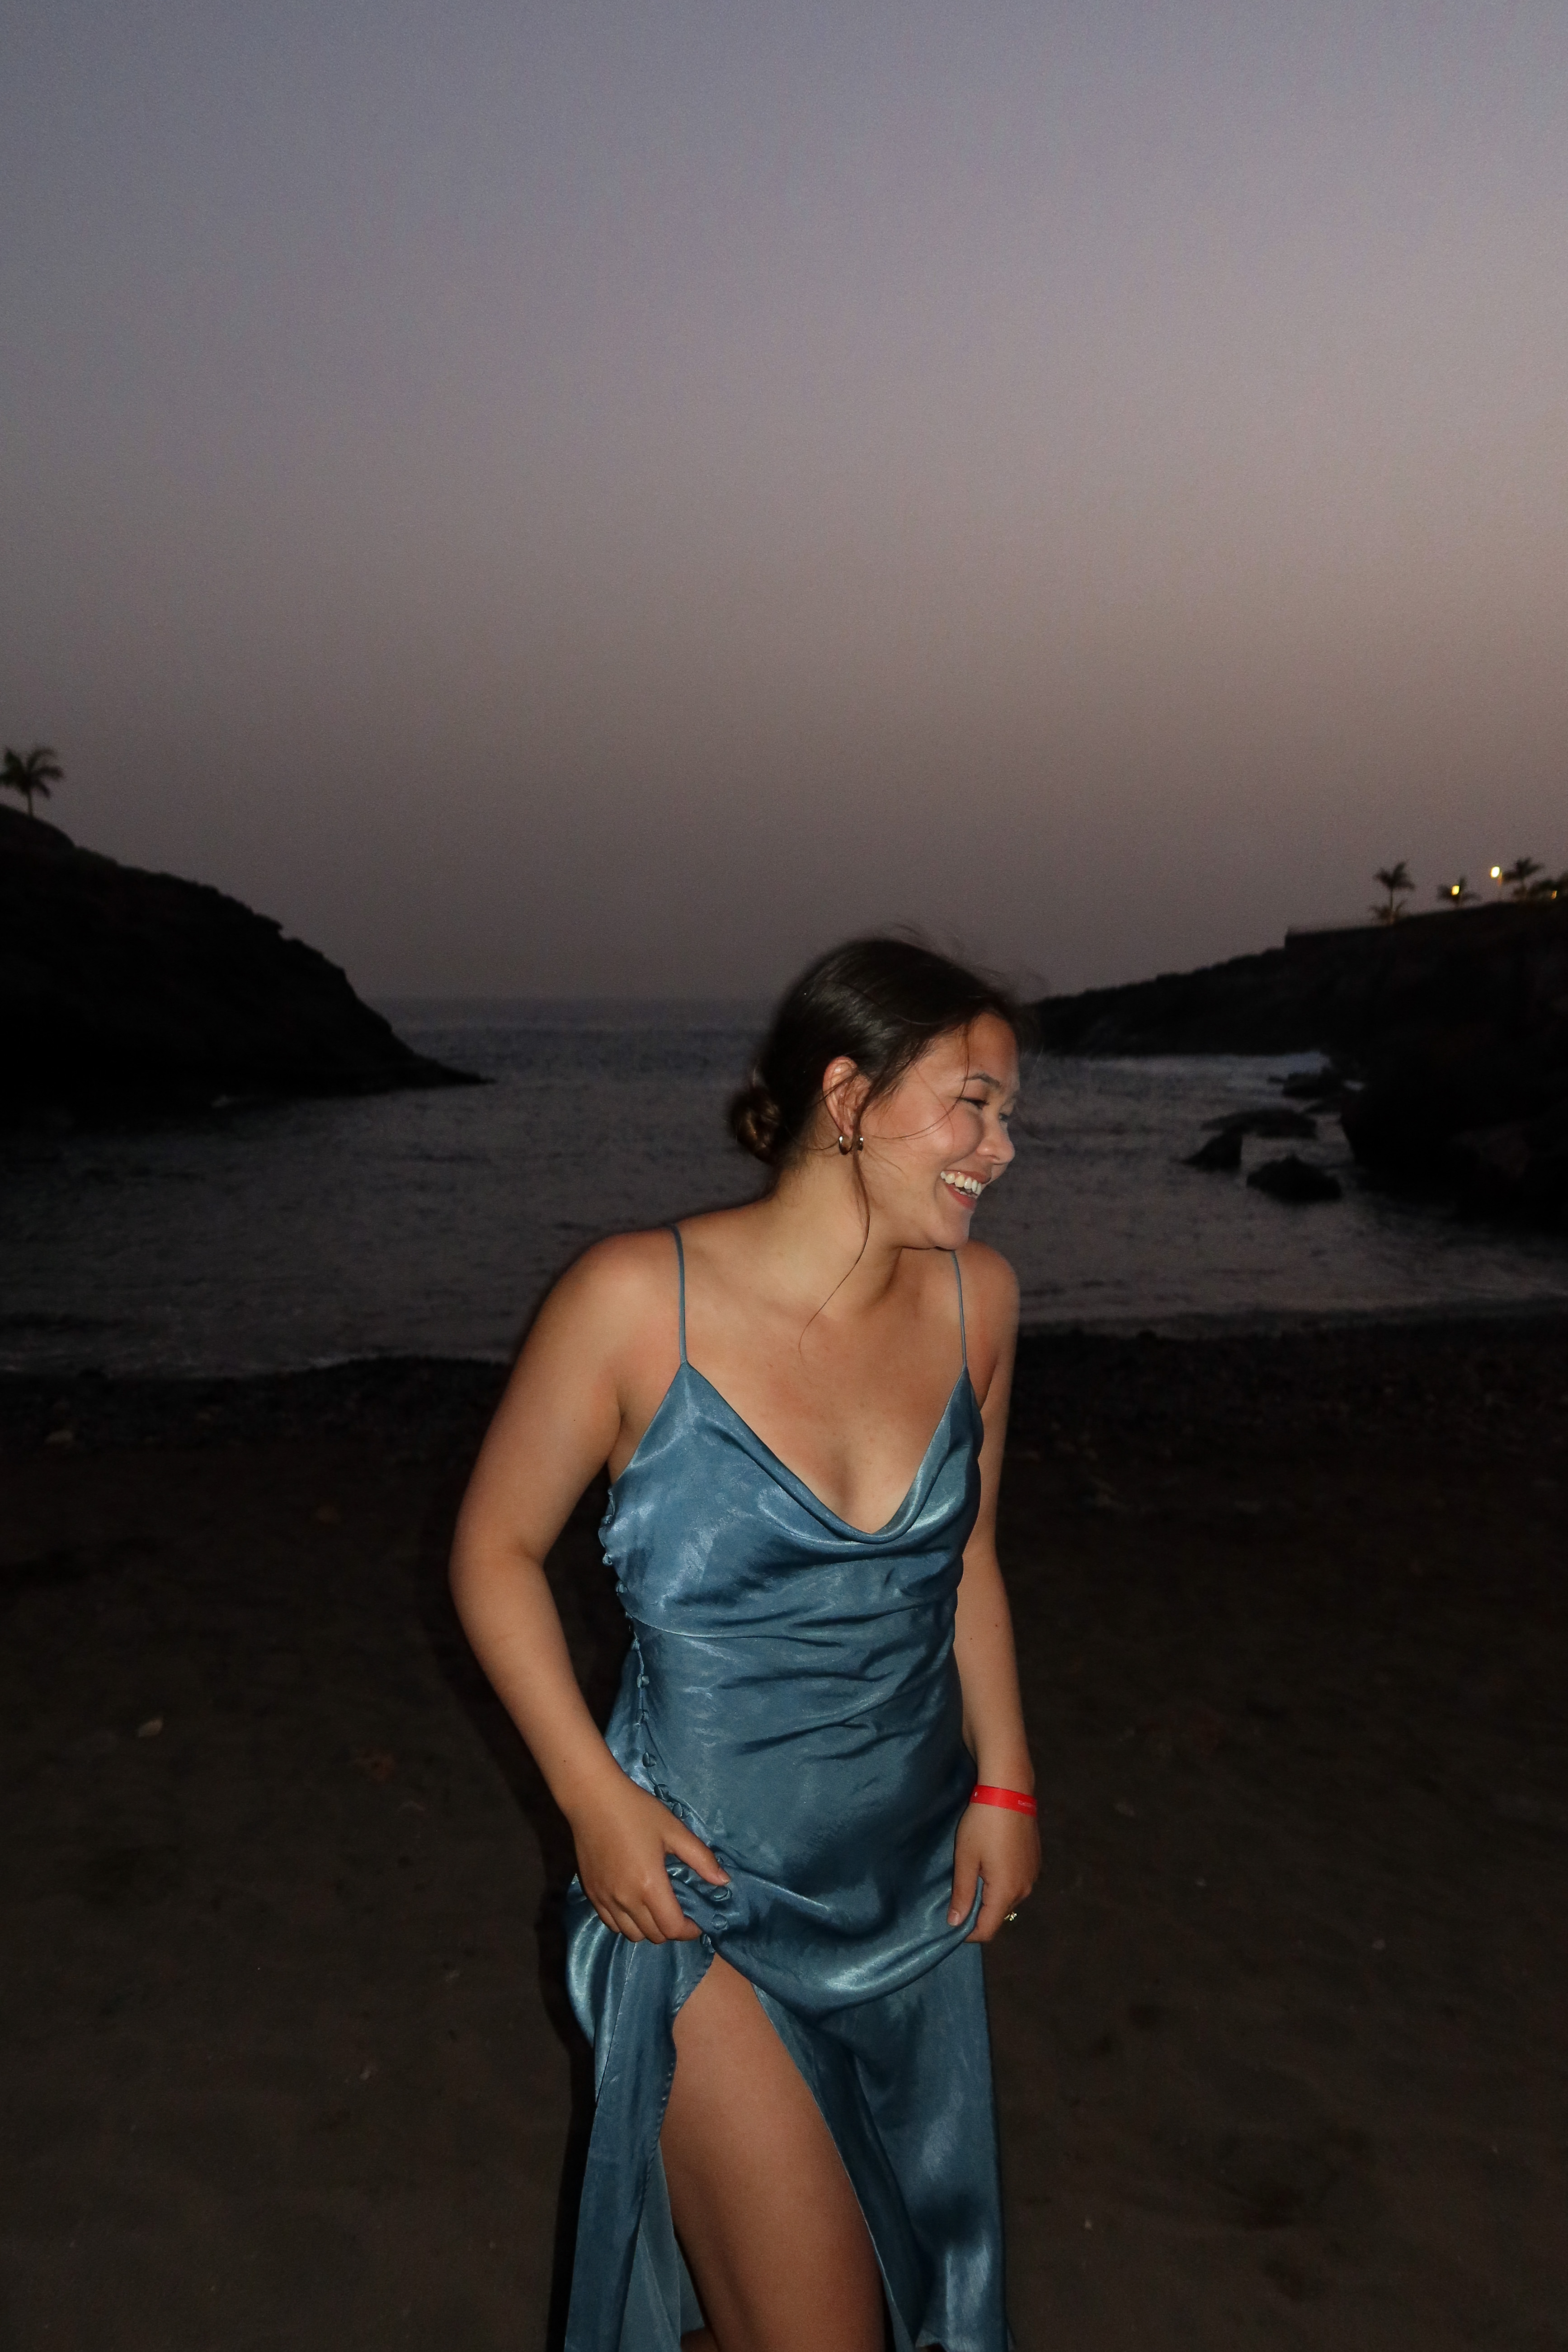 gabrielle koenig, girl with brown hair in teal dress on a beach